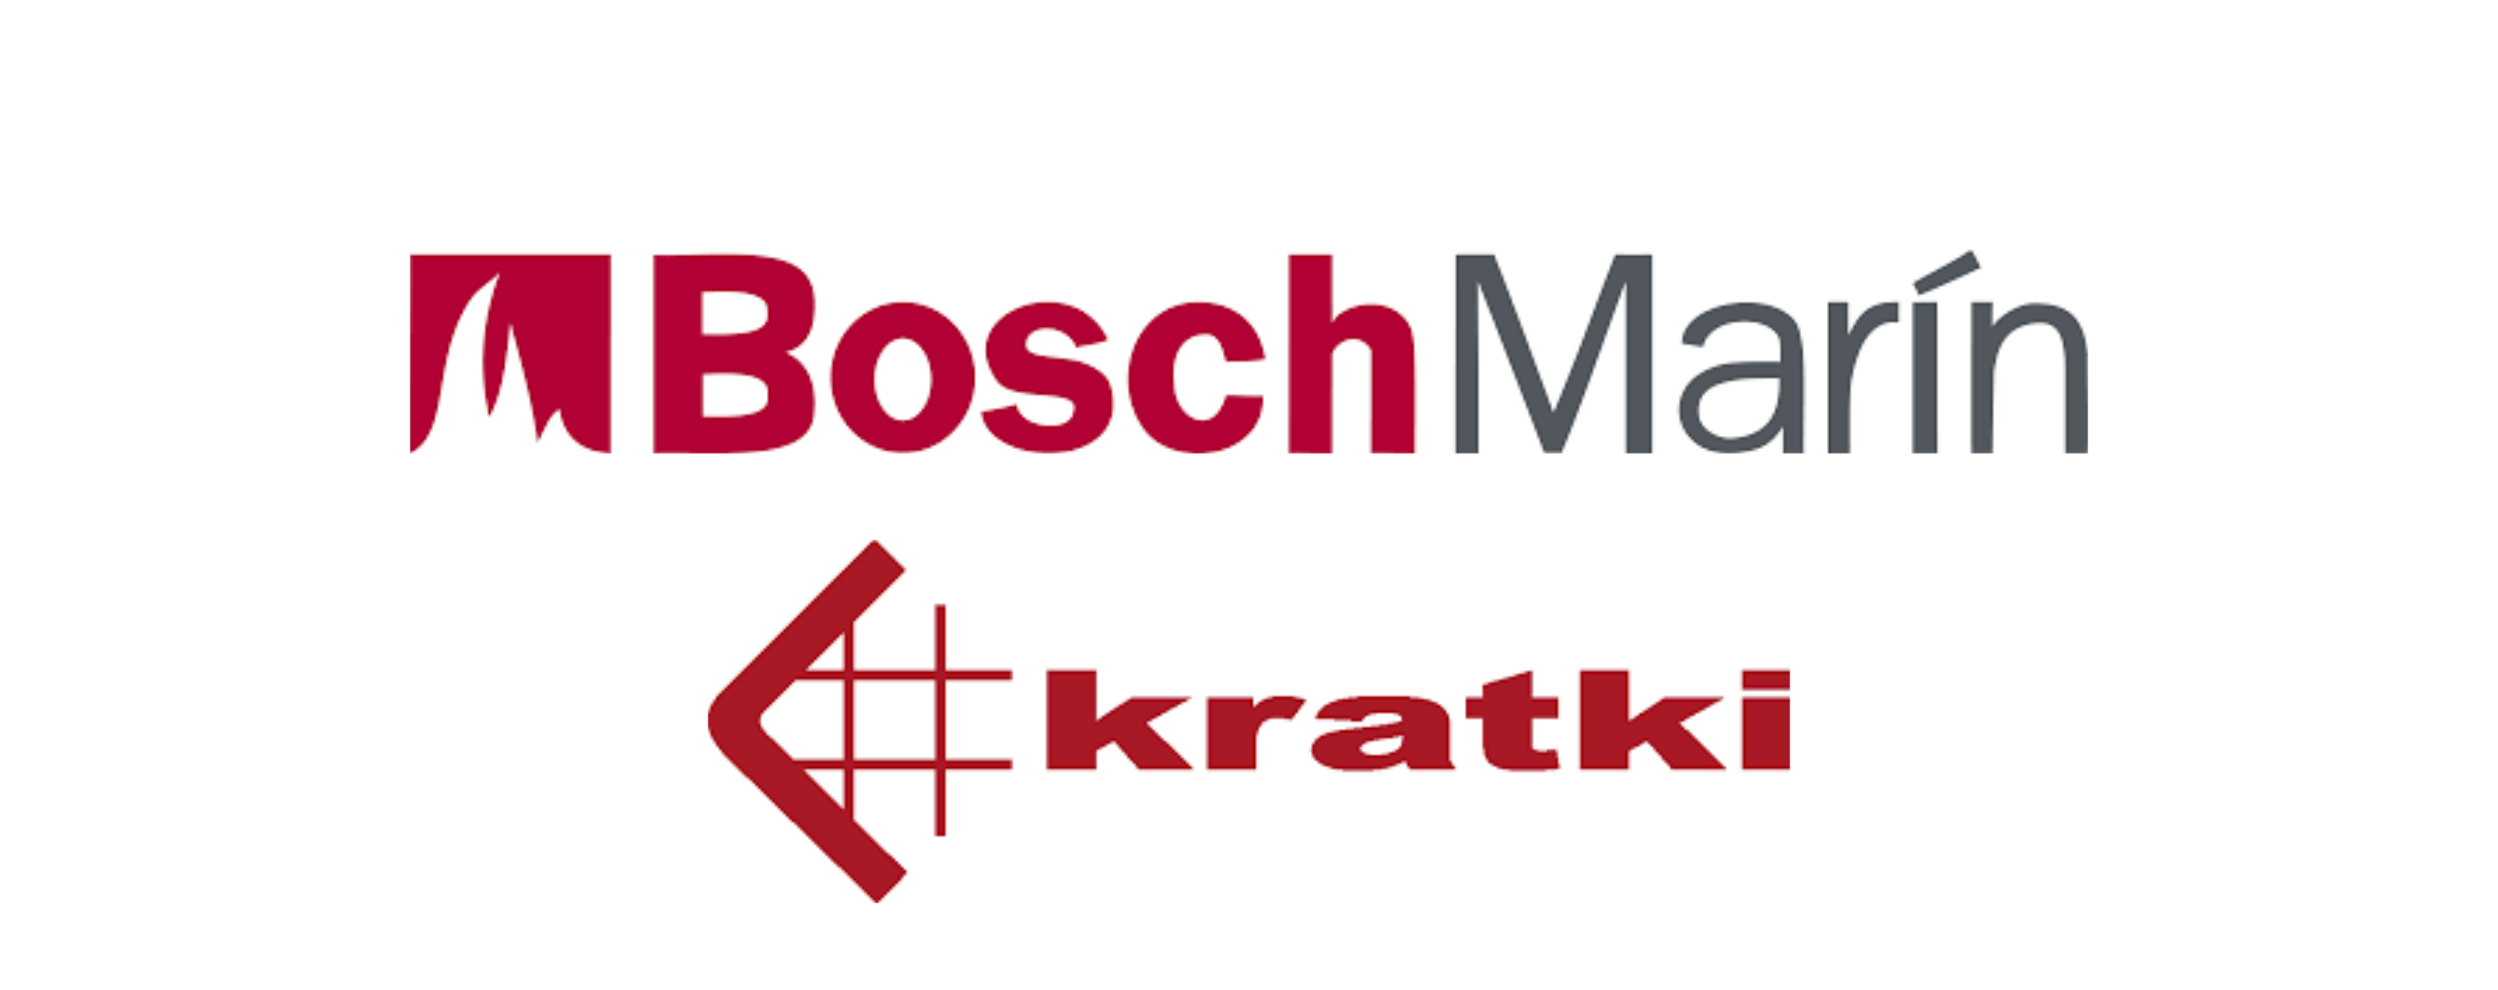 Bosch Marin präsentiert Kratki